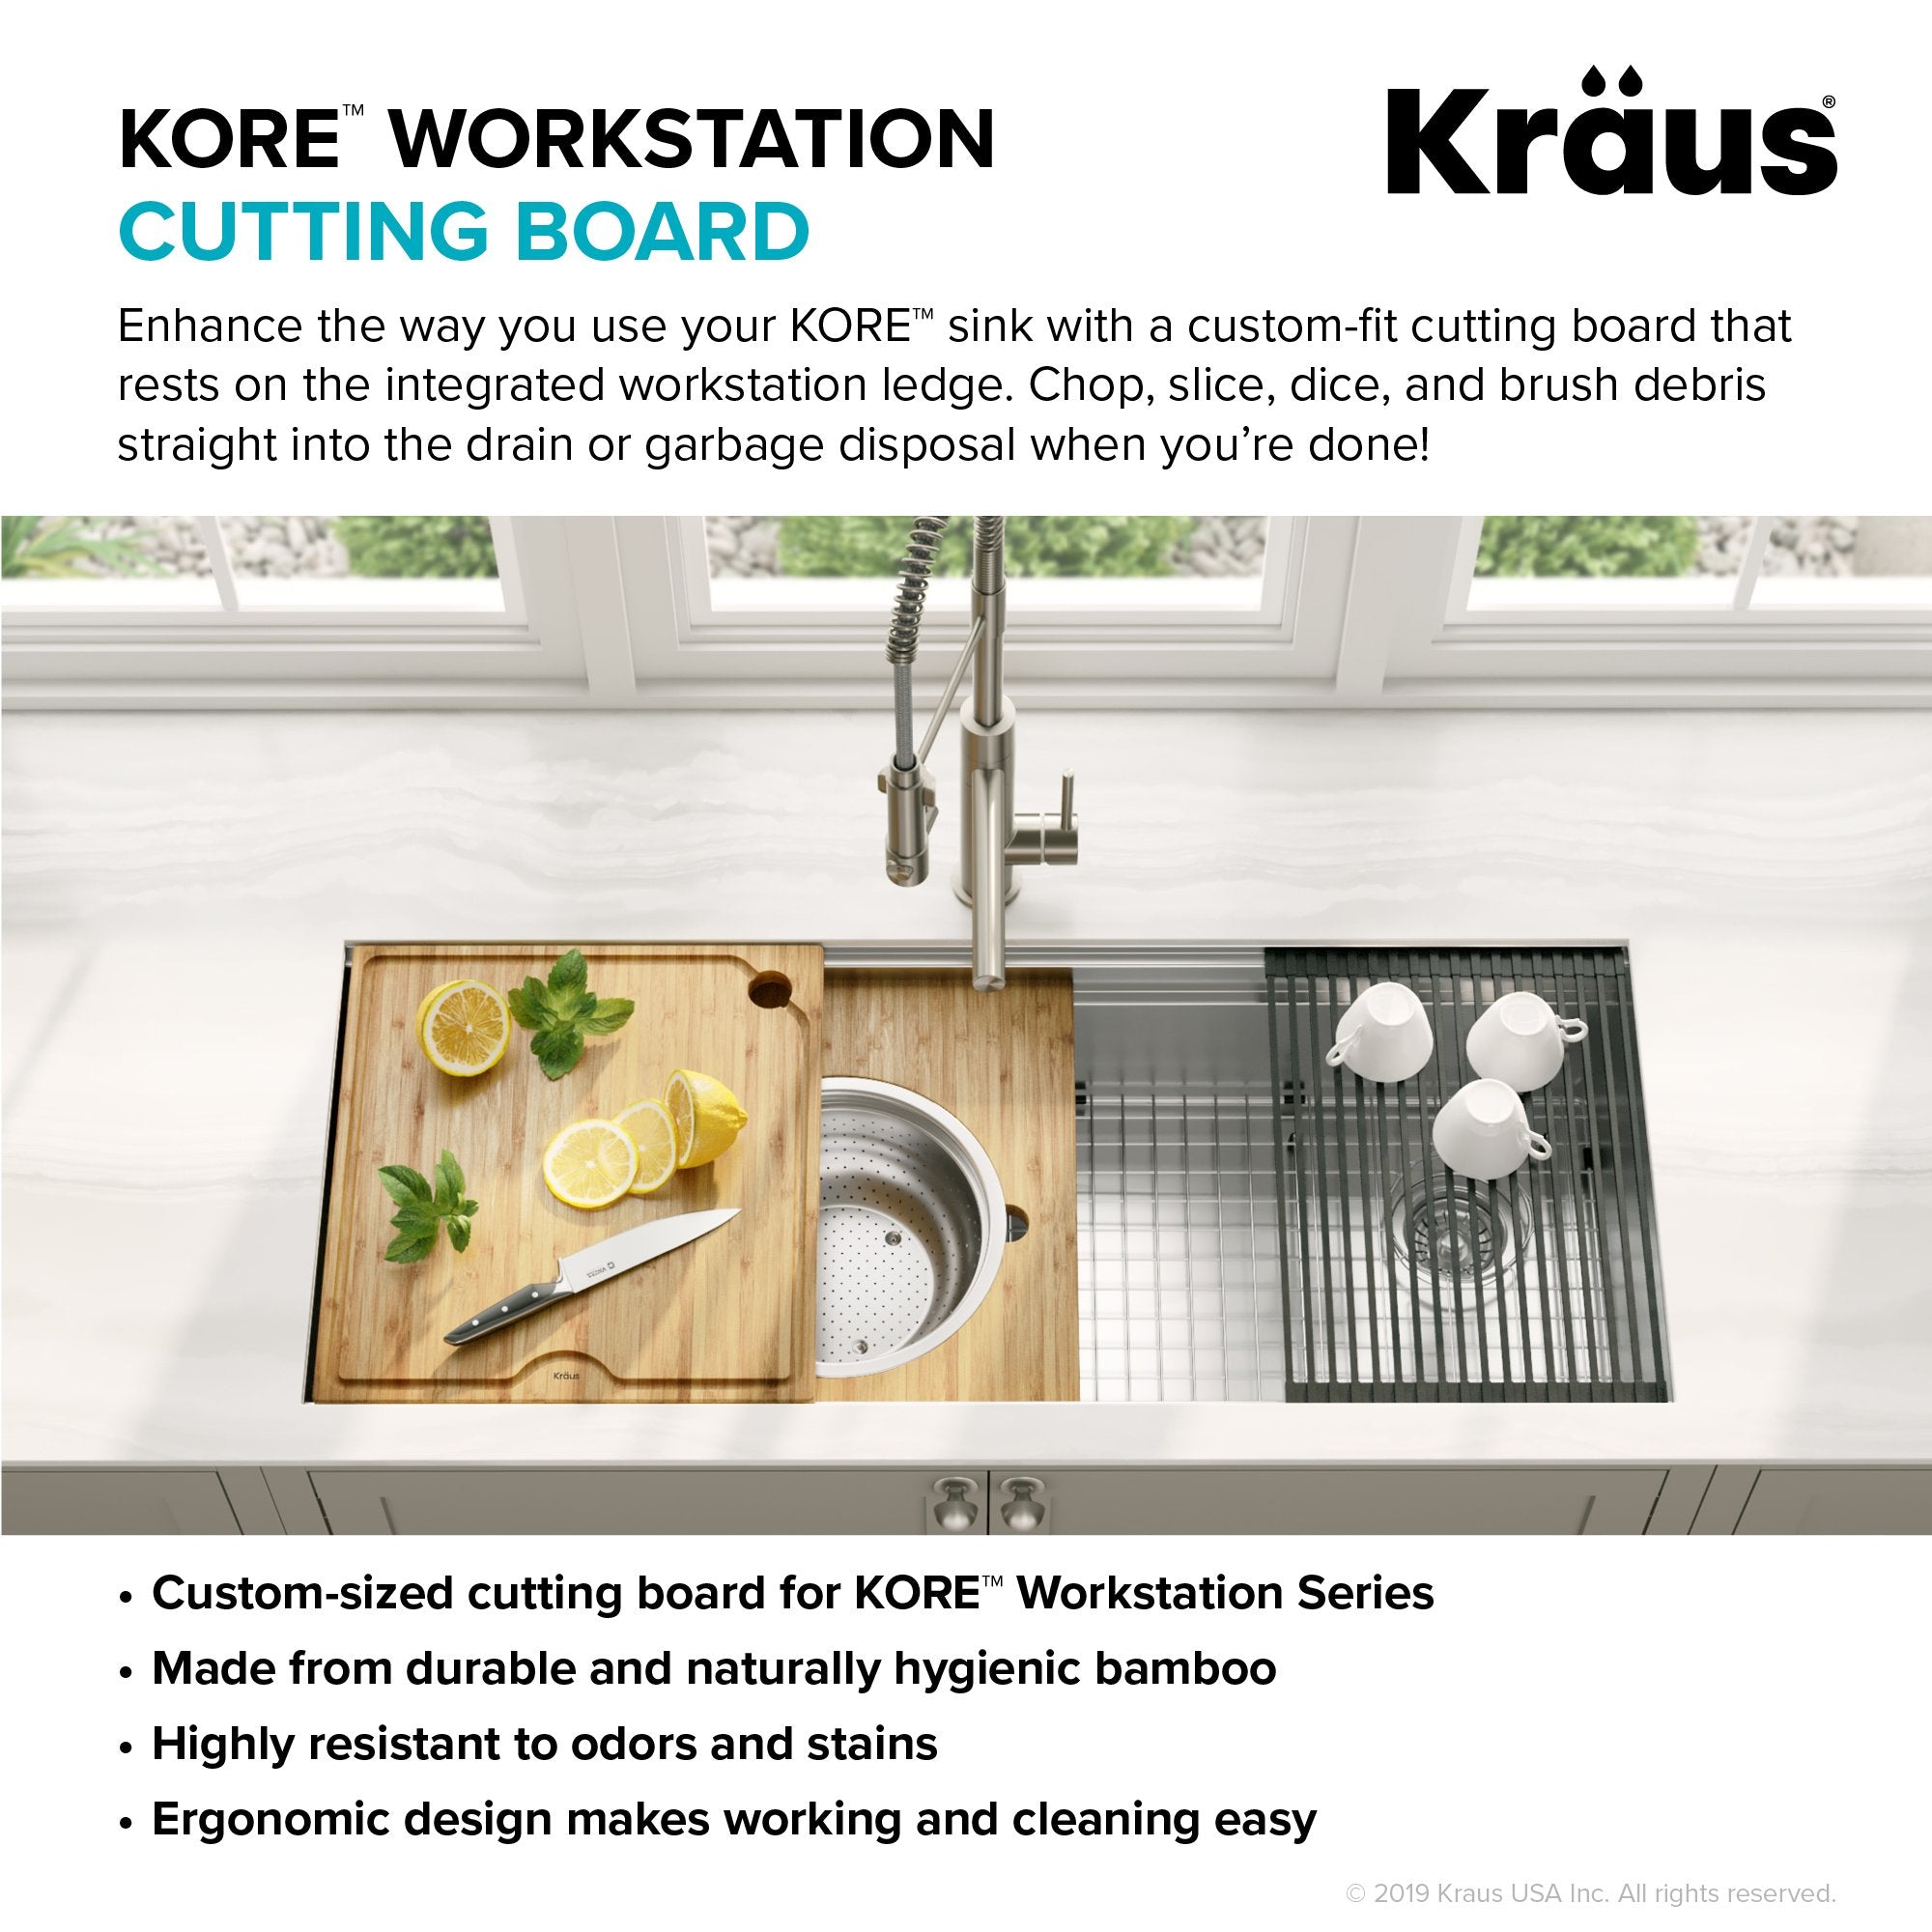 Kraus Workstation Kitchen Sink Wood Grain Composite Cutting Board KCB-WS301SA